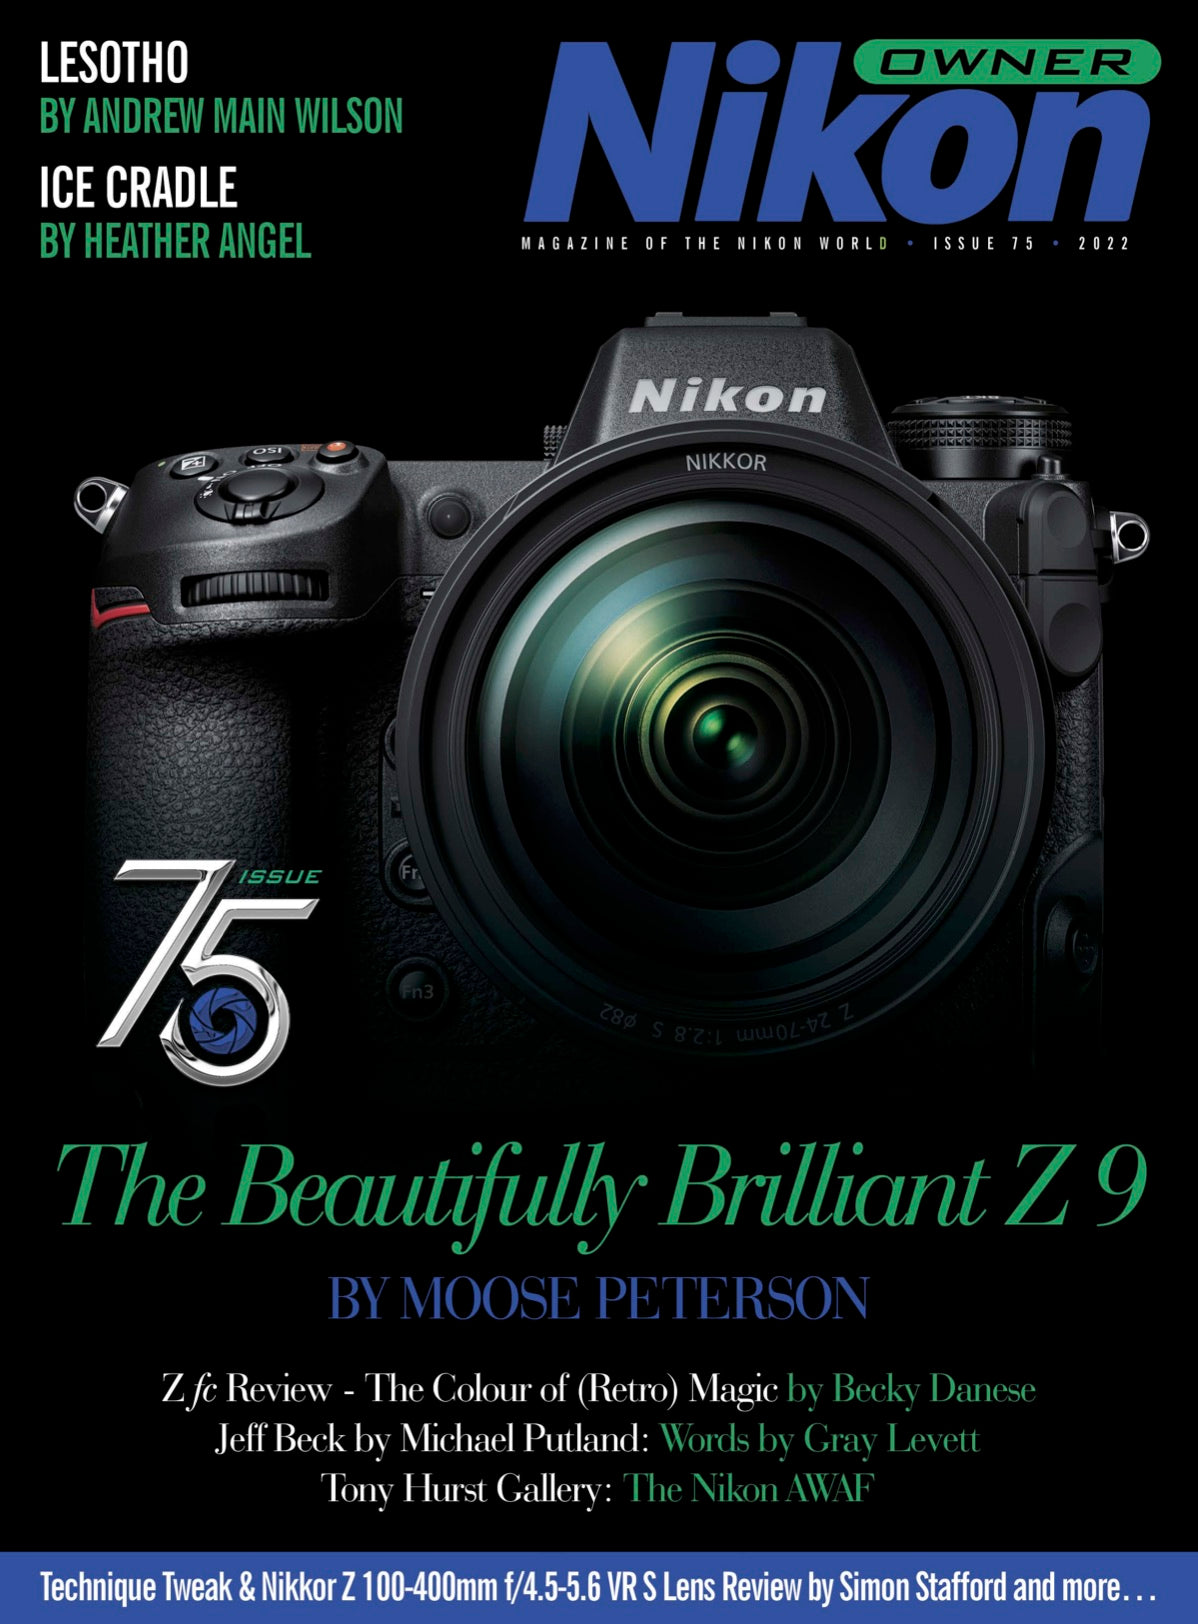 Nikon Owner Magazine issue 75